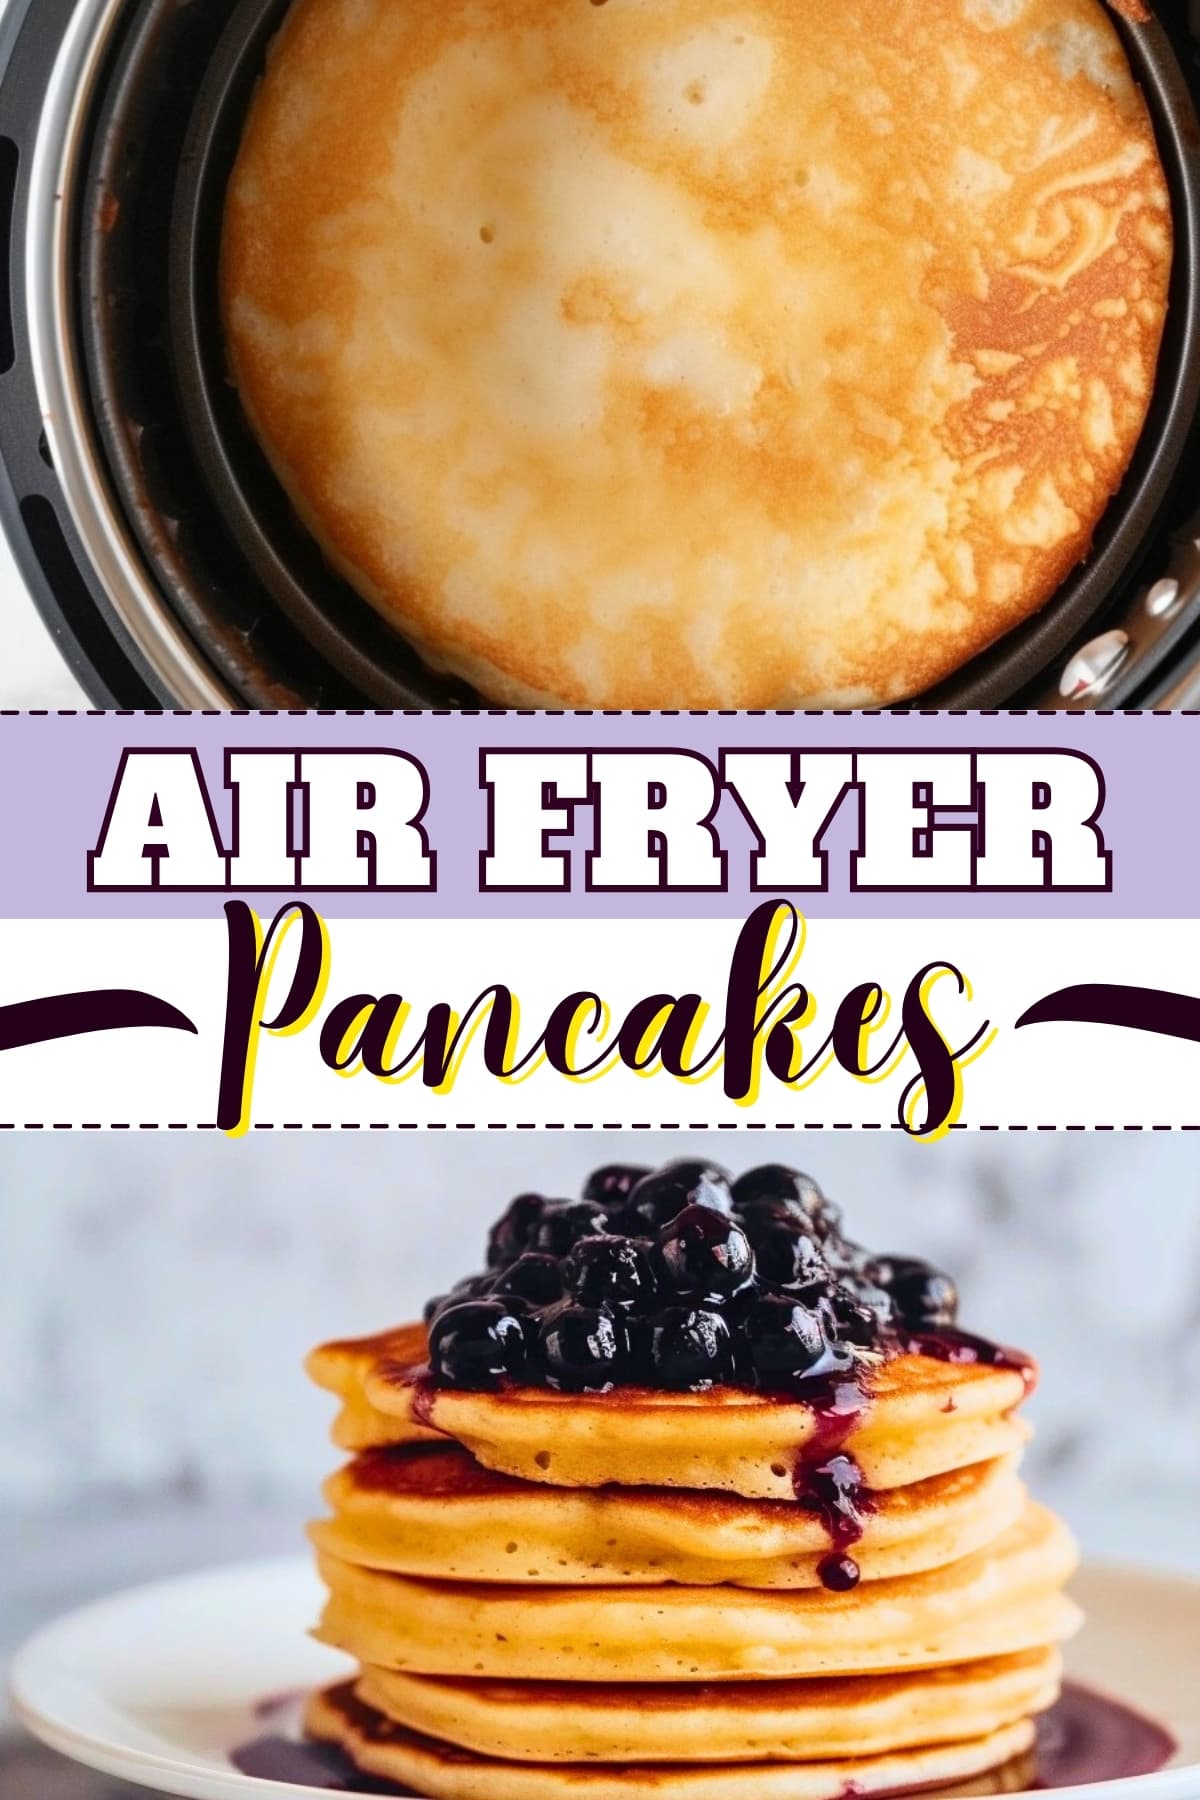 Air fryer pancakes